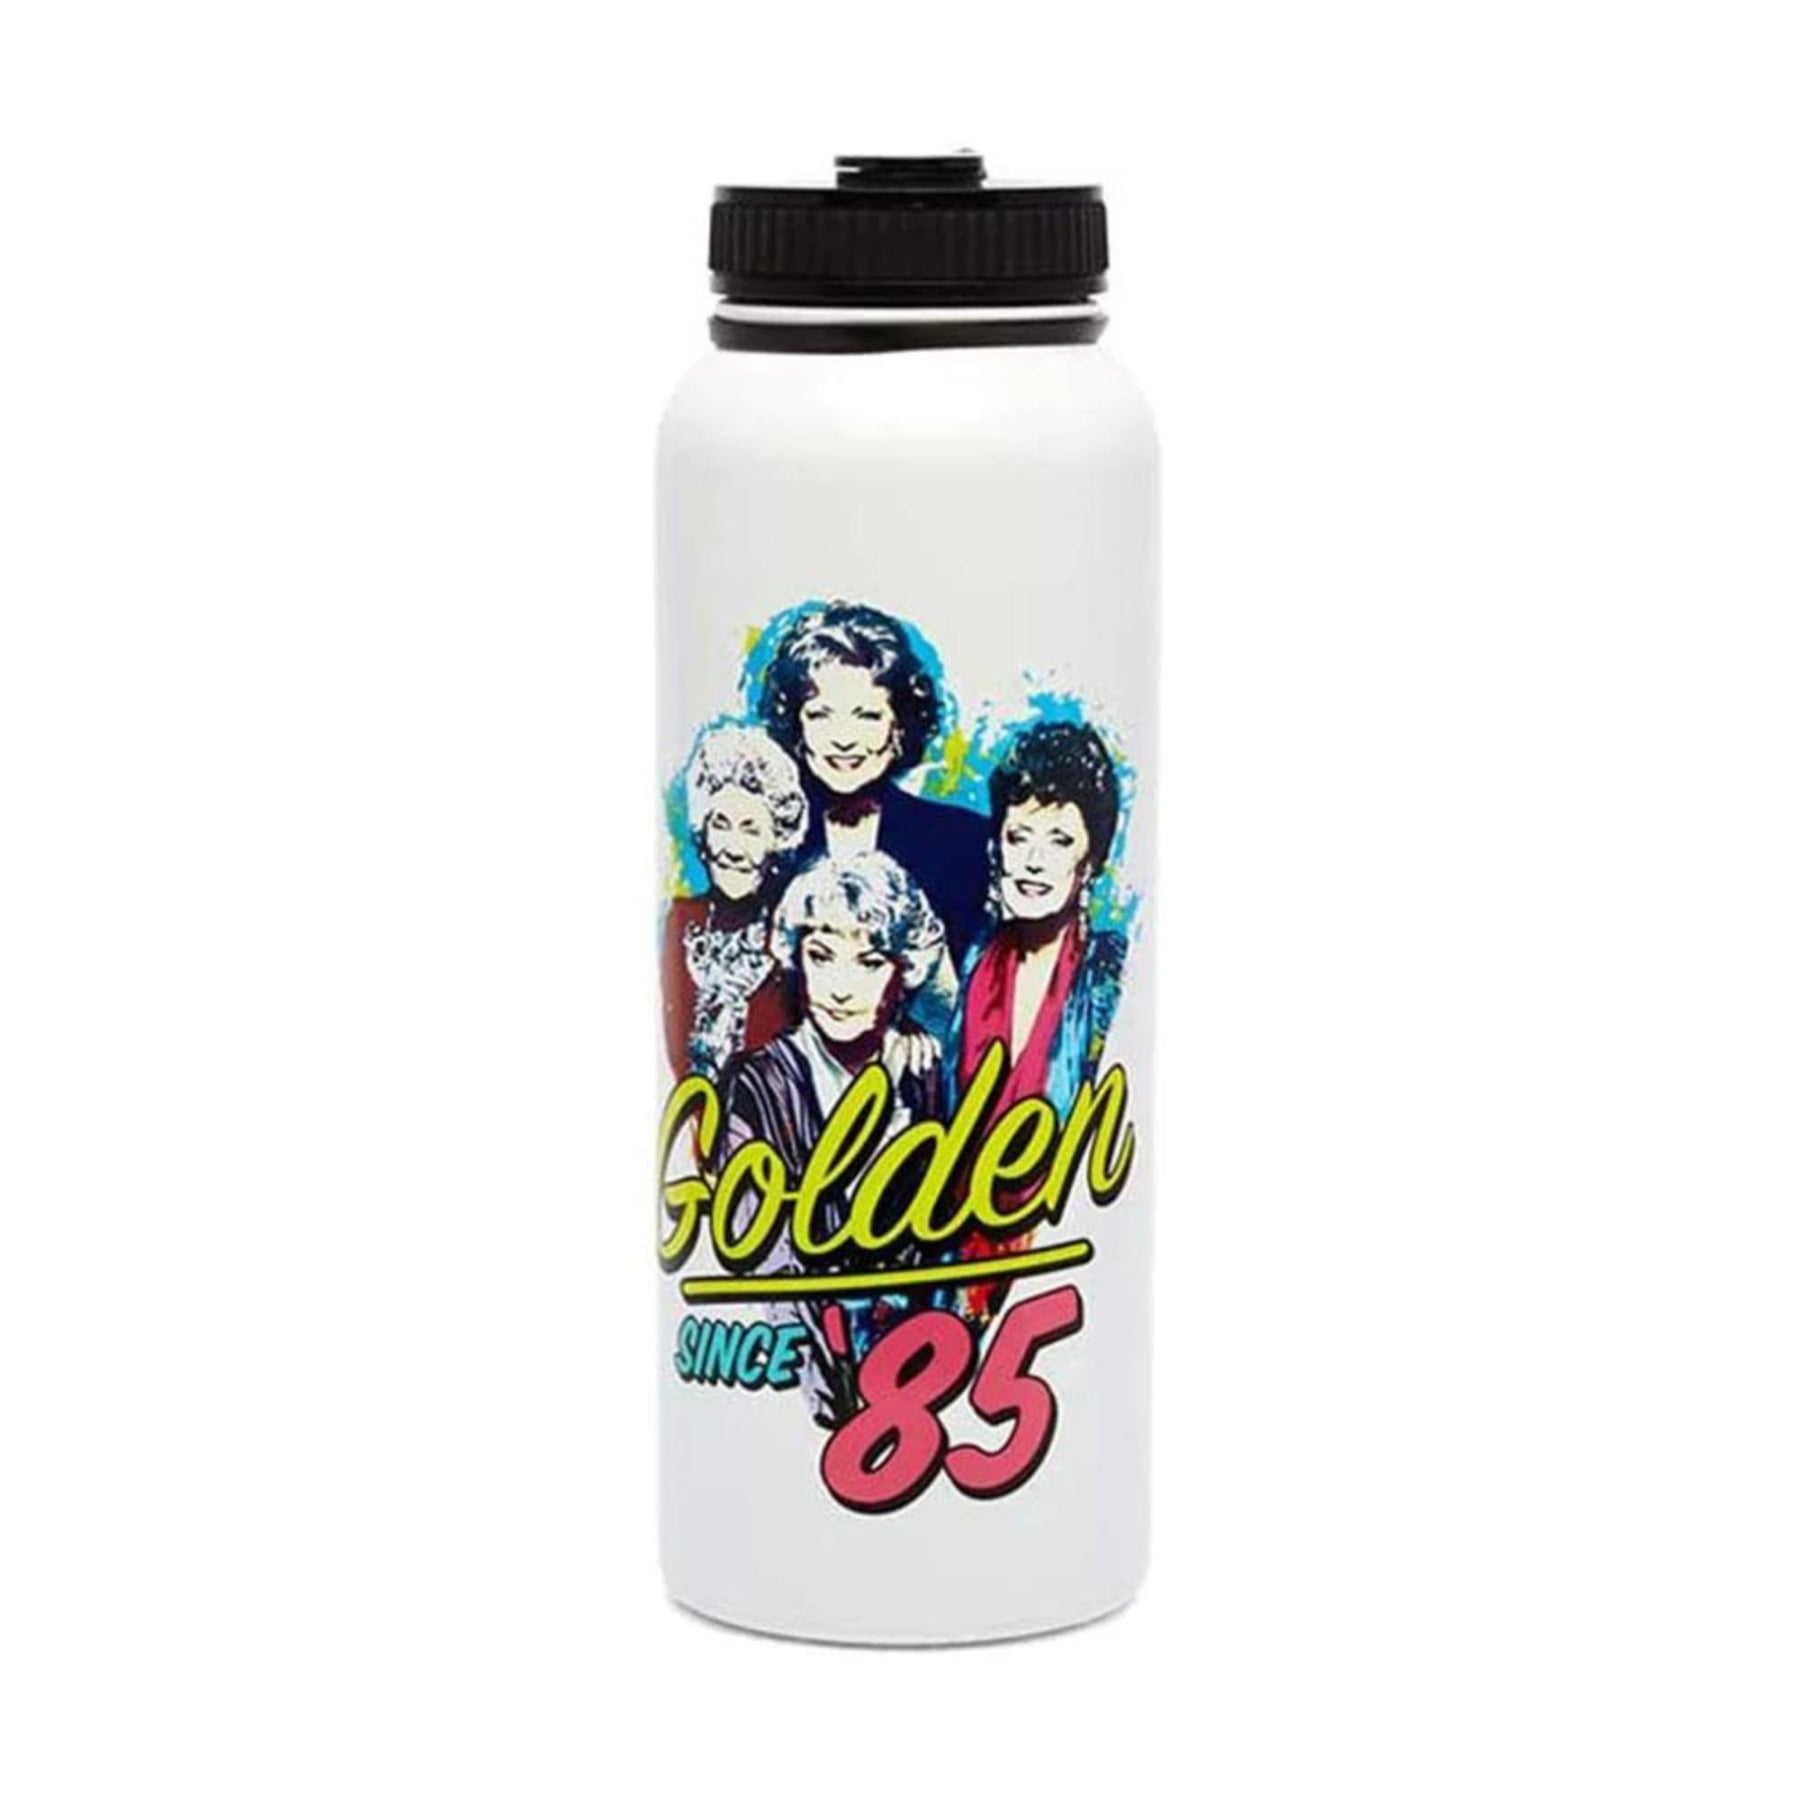 The Golden Girls "Golden Since 85" 32oz Stainless Steel Water Bottle